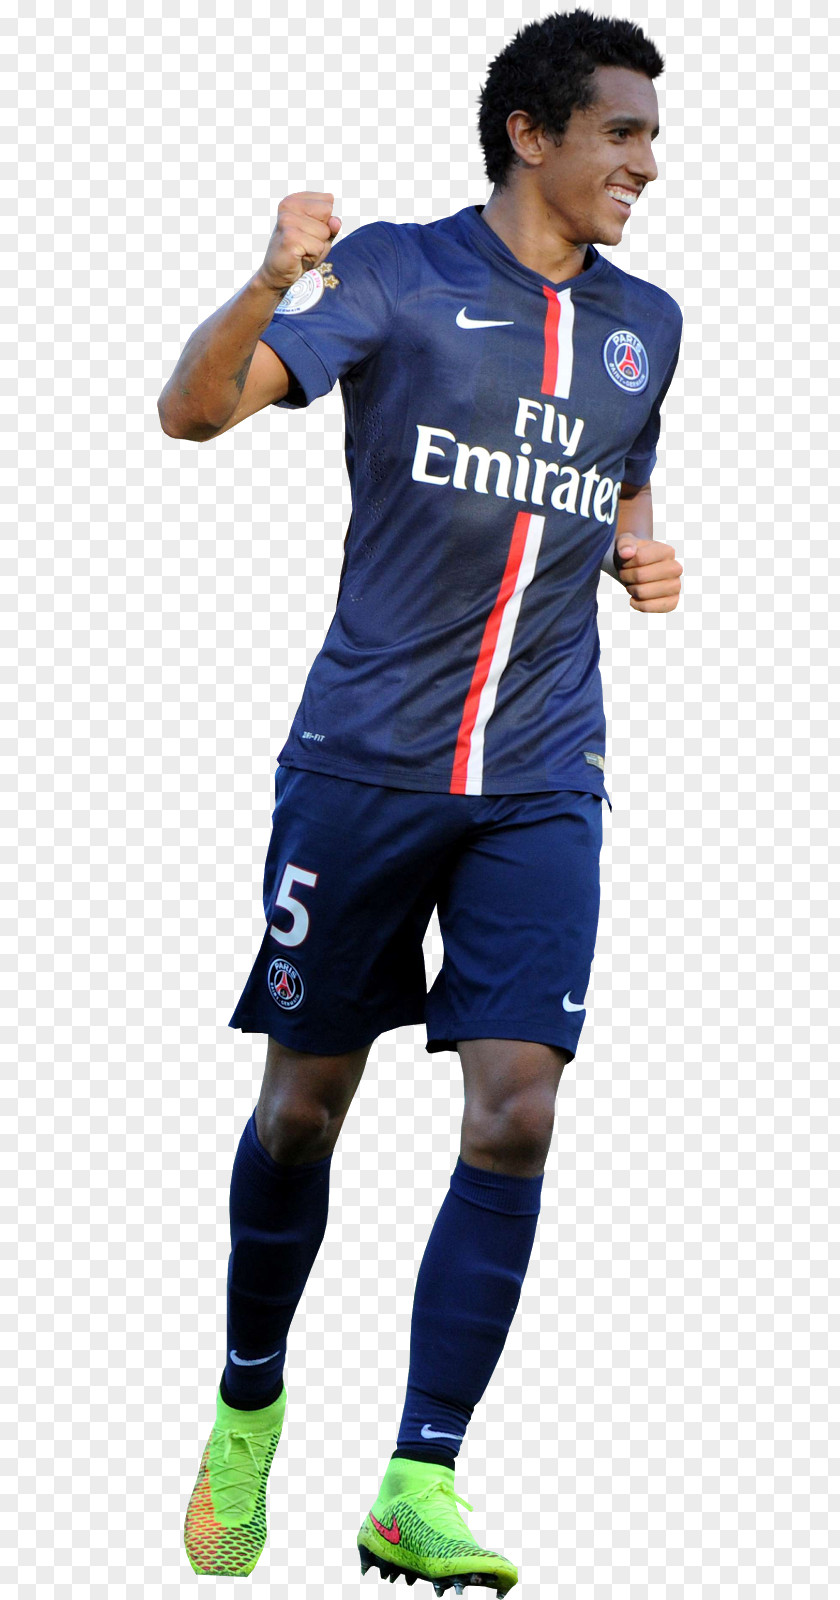 Marquinhos Soccer Player Paris Saint-Germain F.C. Team Sport Football PNG